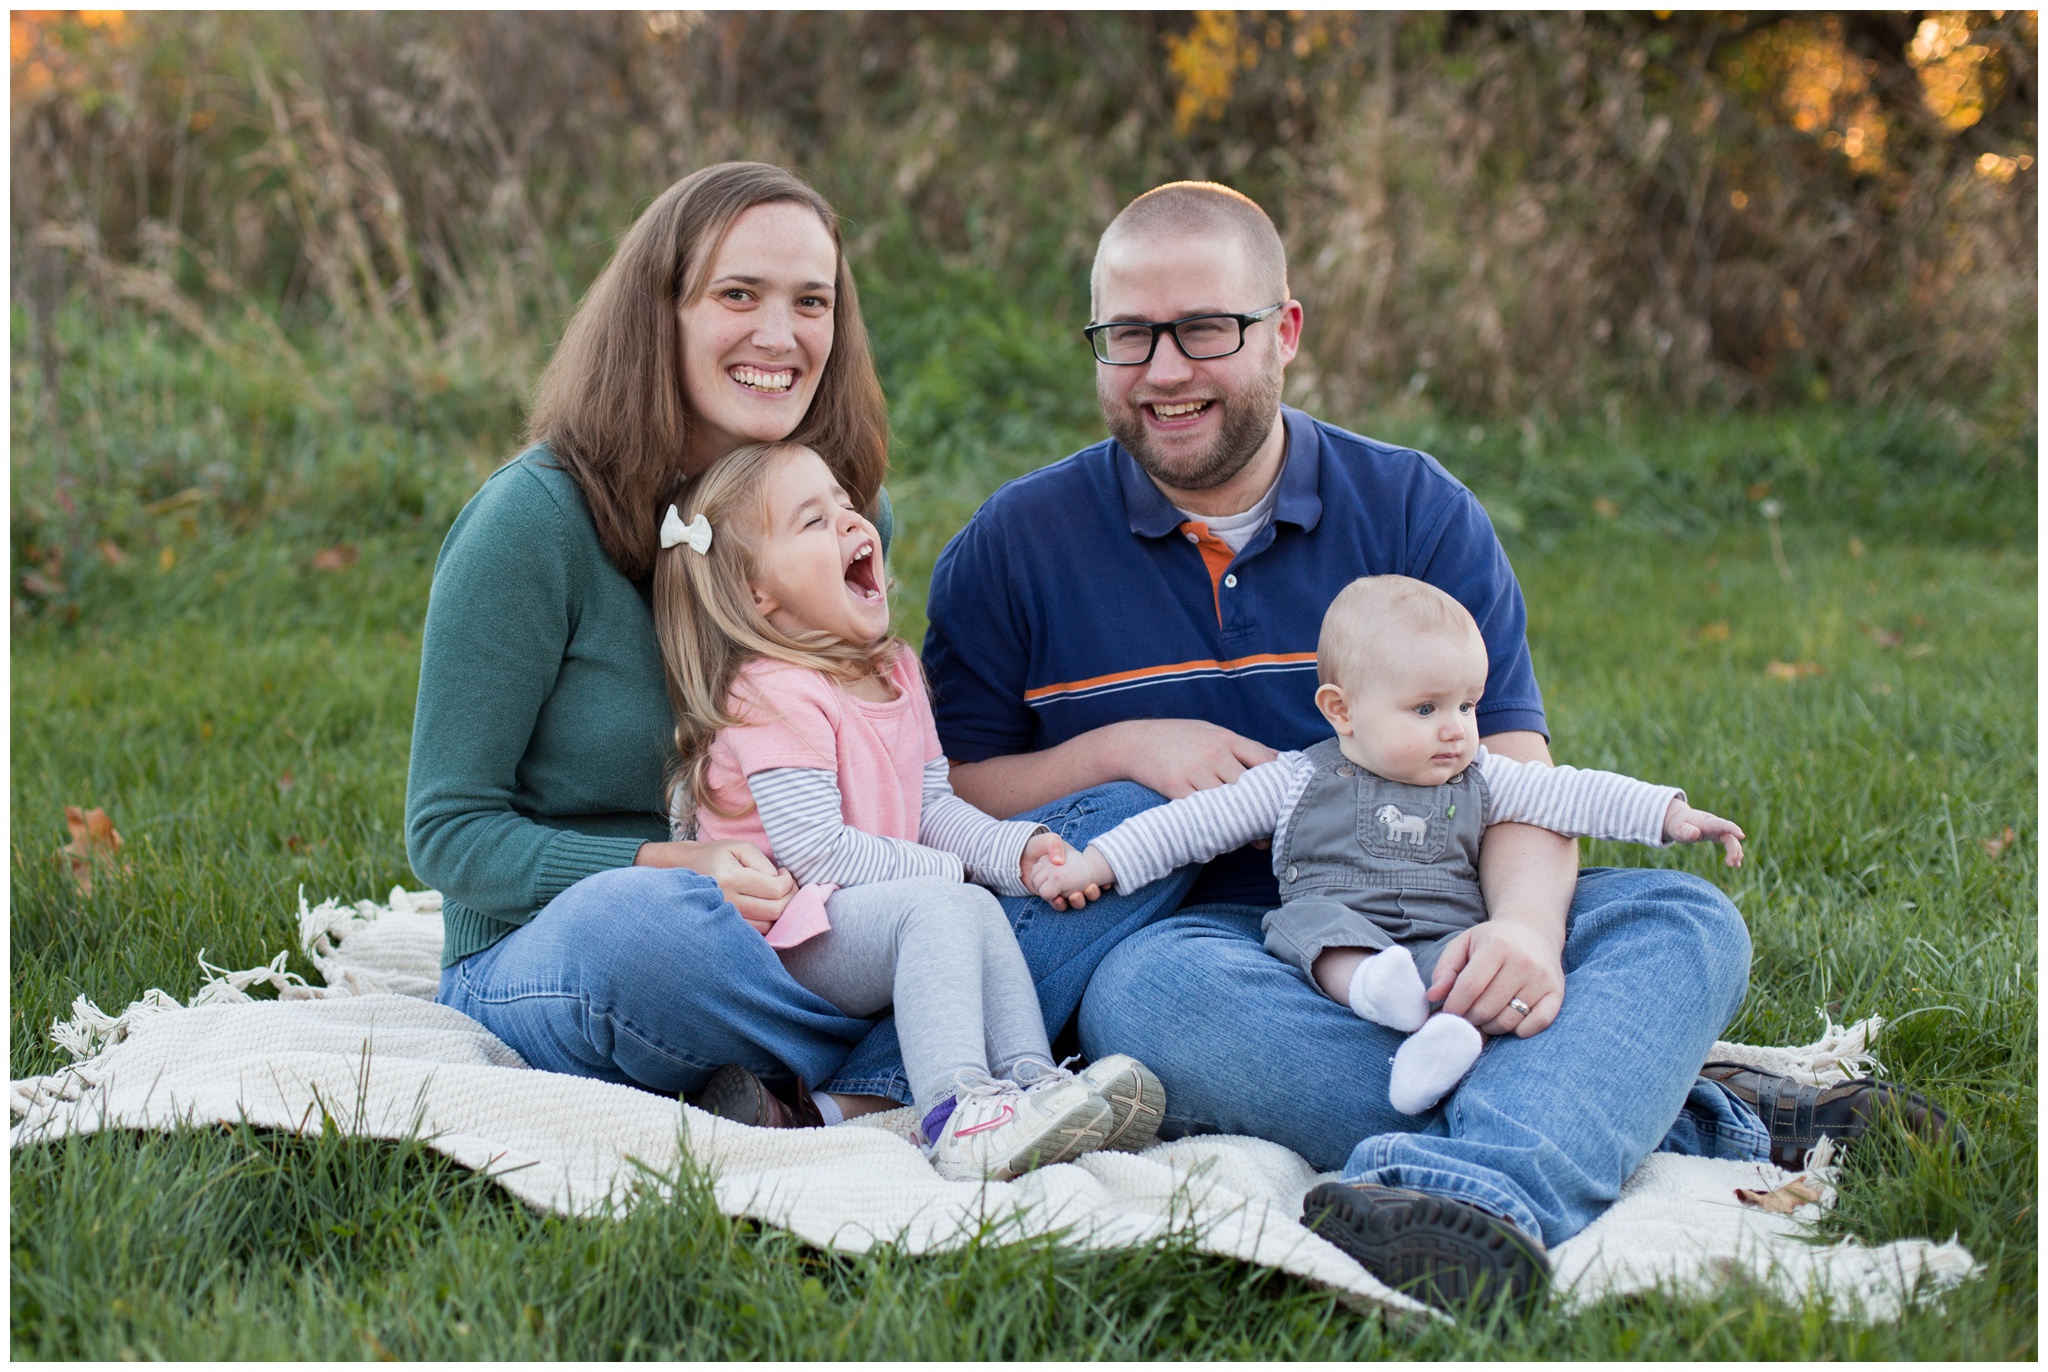 family portrait session at Wildkat Creek Reservoir Park in Kokomo, Indiana